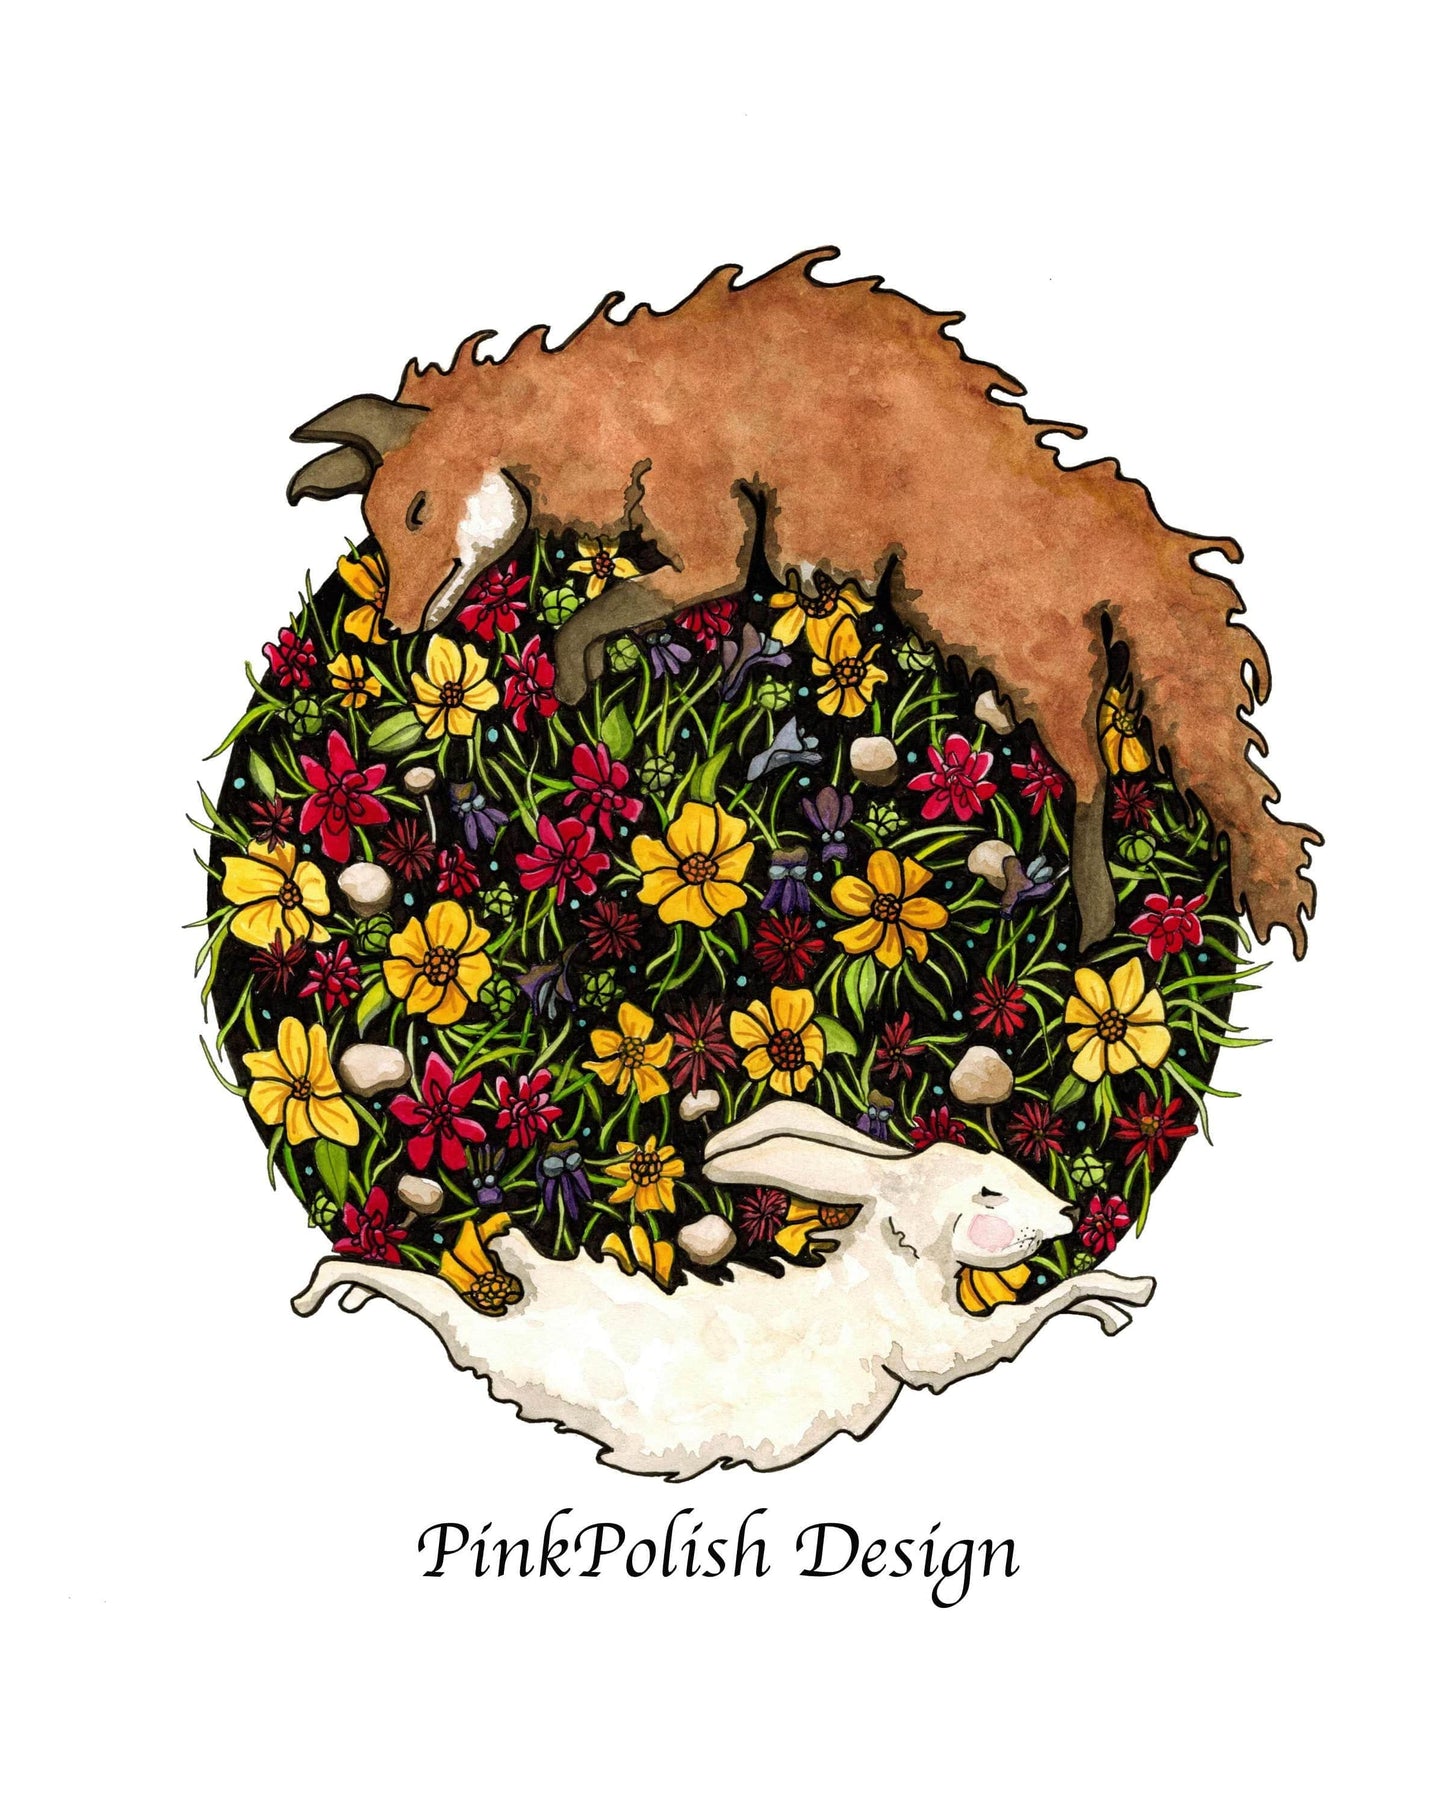 PinkPolish Design Art Prints "Fox and the Hare" Watercolor Painting: Art Print